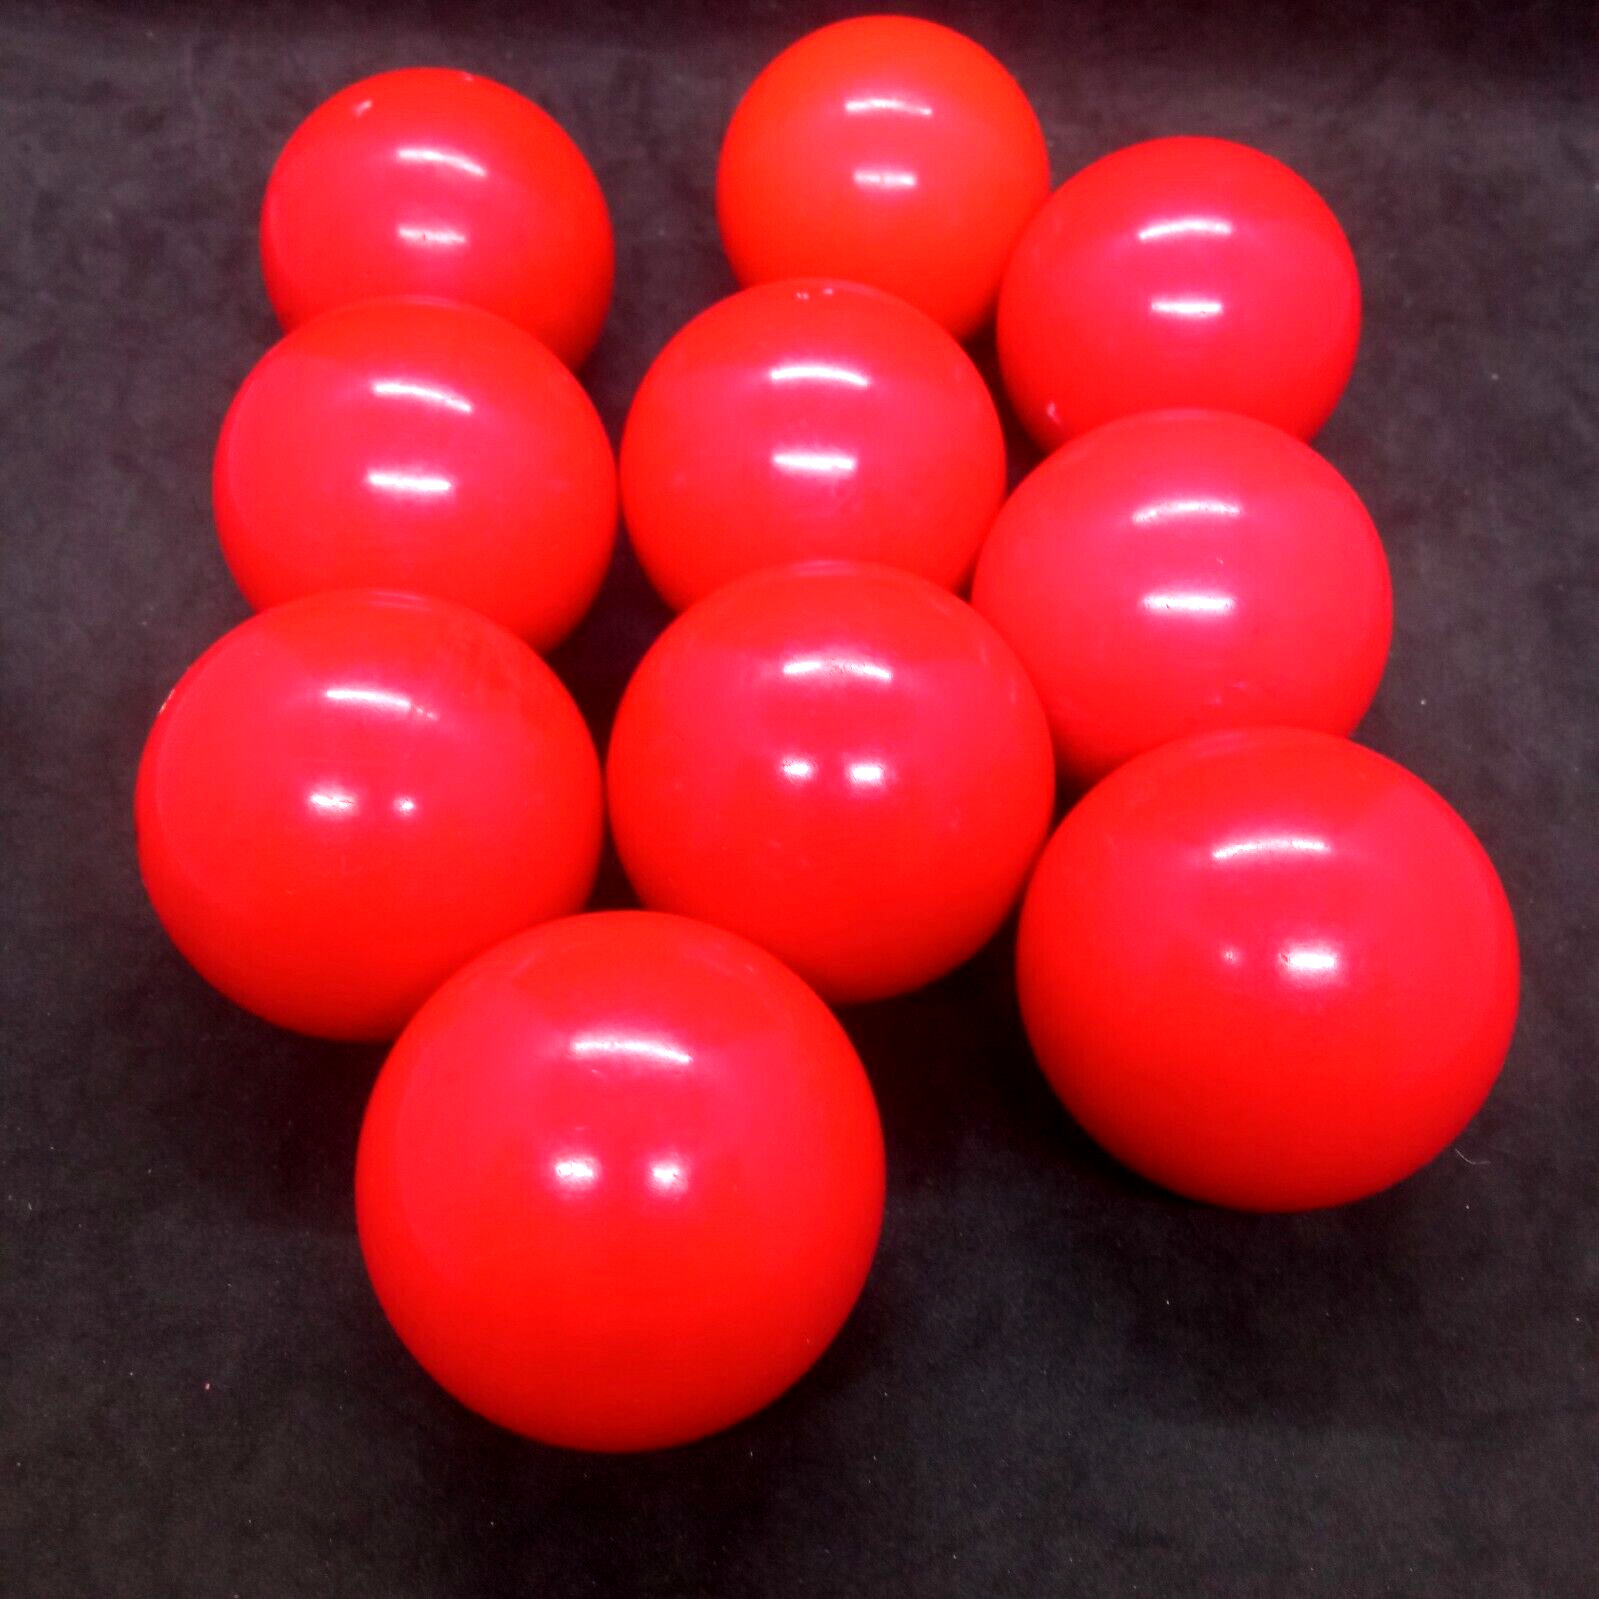 Antique Red Cherry Amber Catalin Bakelite Phenolic Resin 10 Balls 1134 Gram